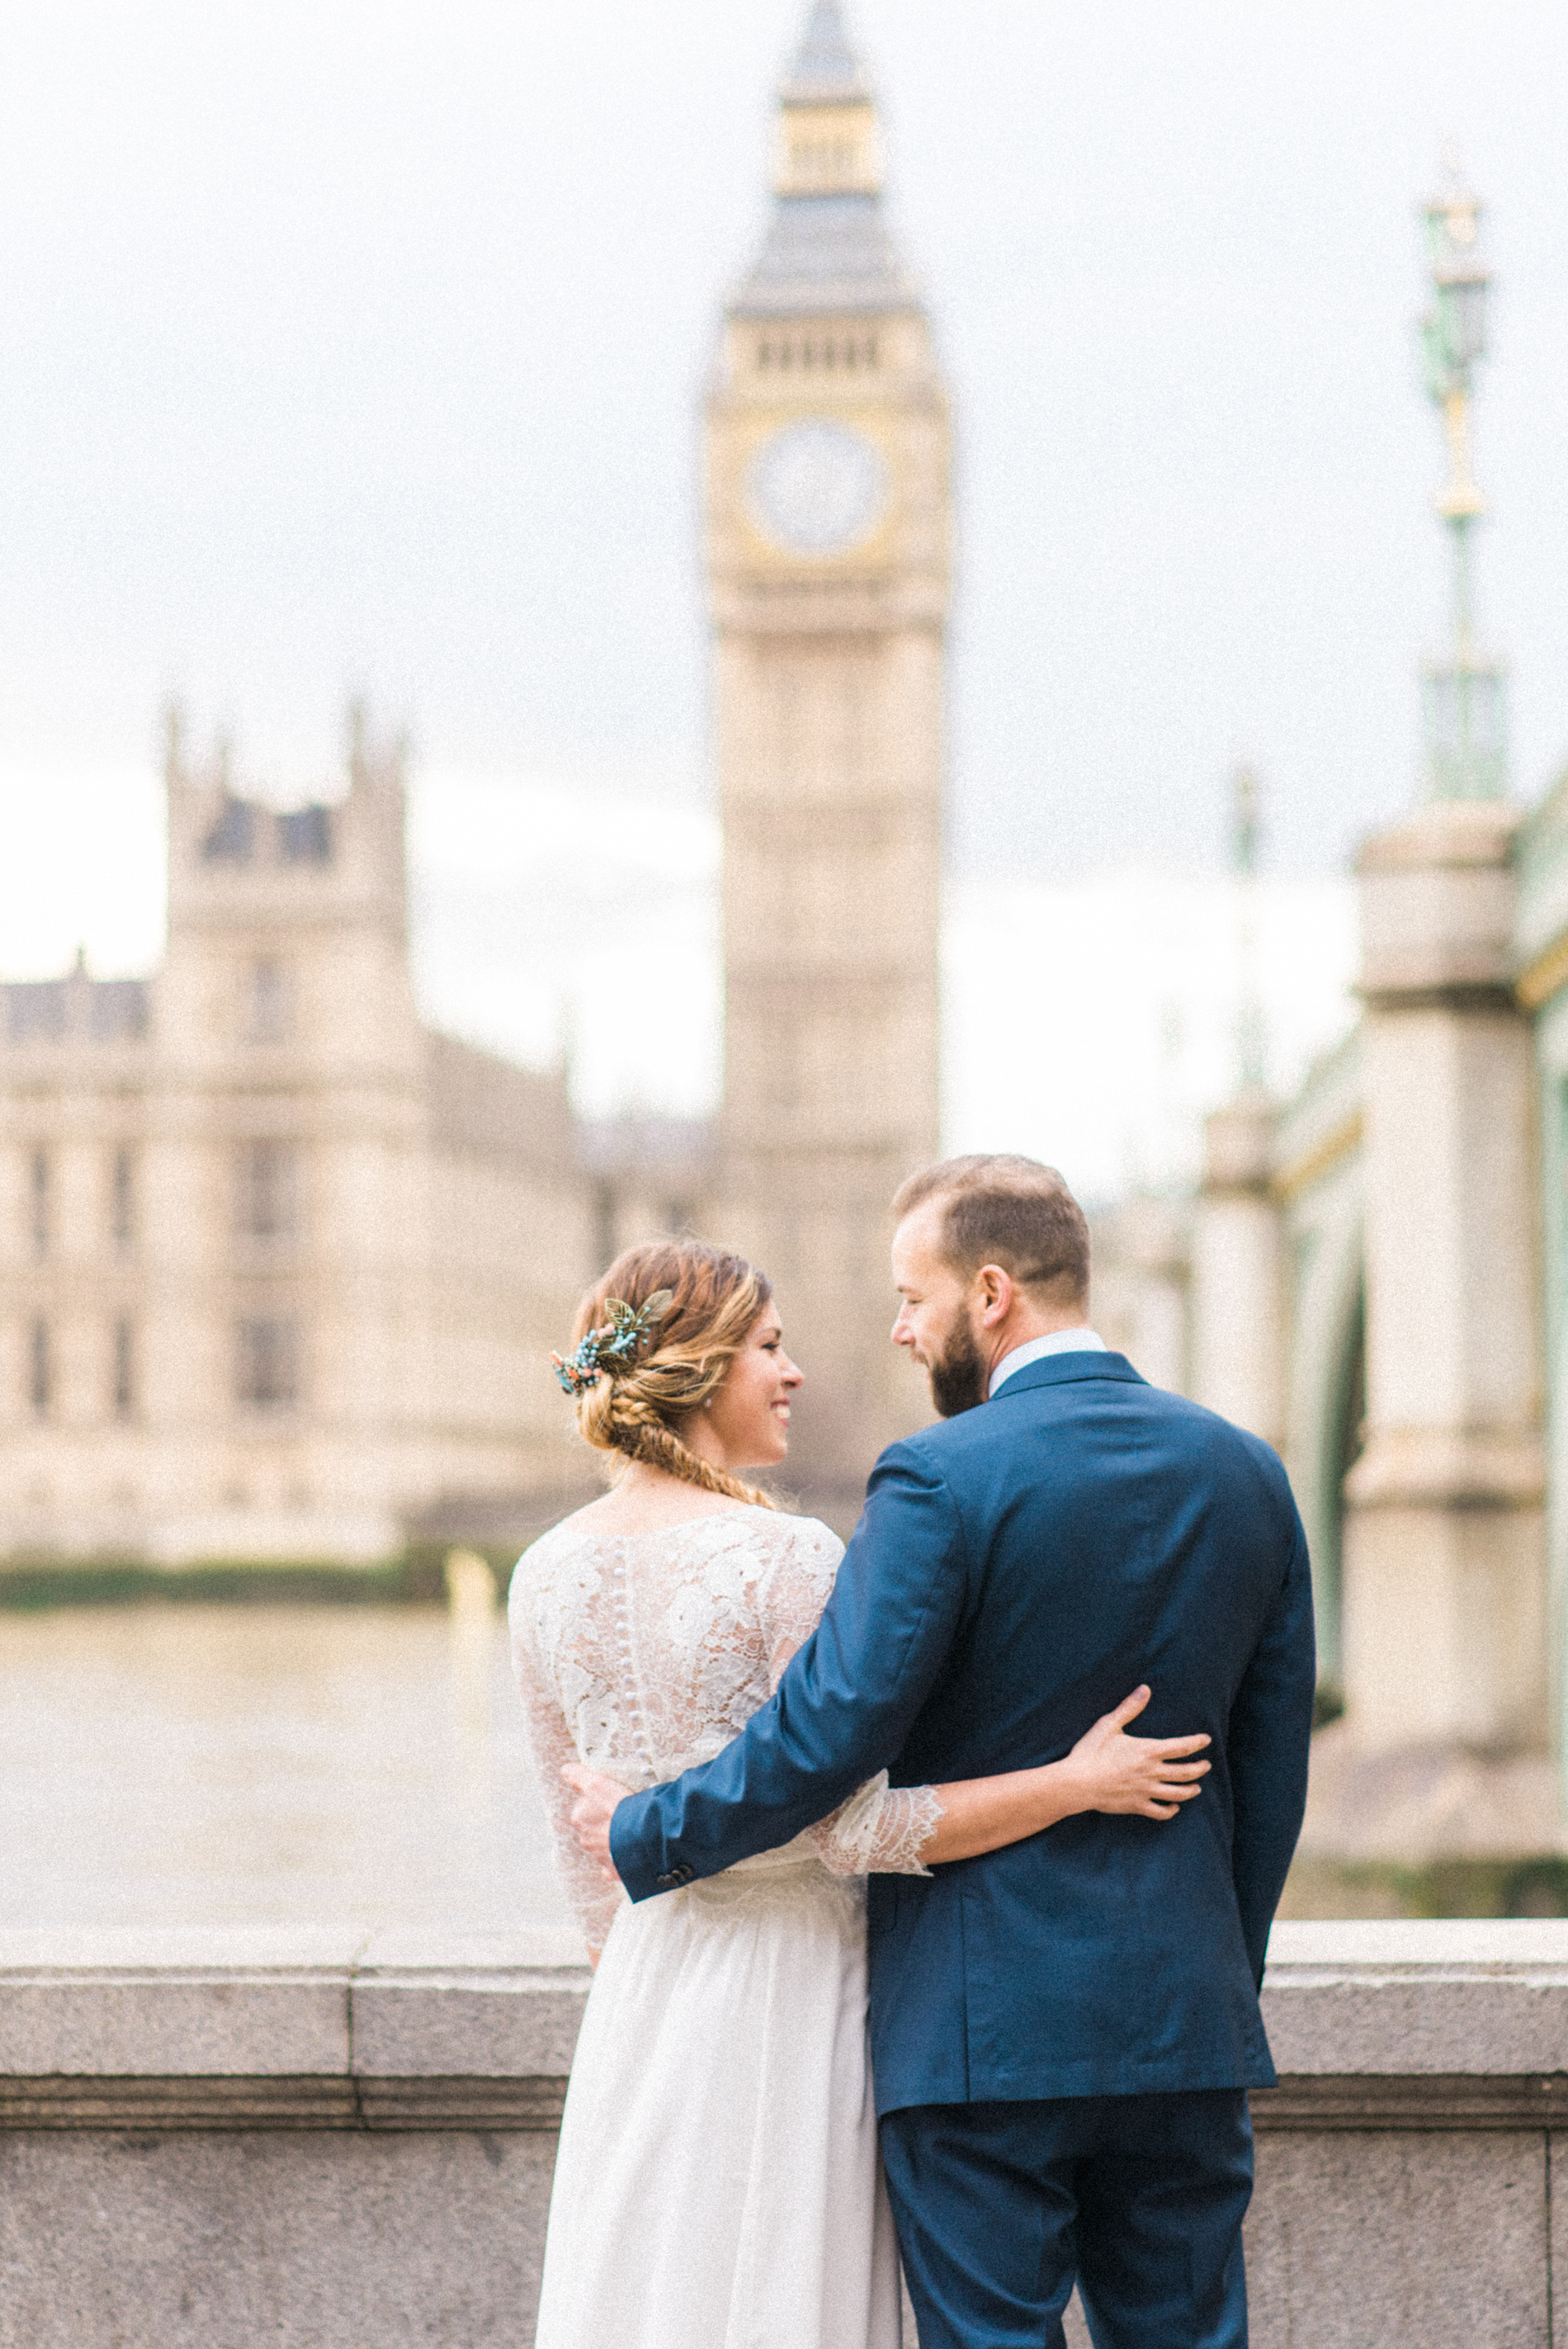 Modern-Vintage London Wedding - A Styled London Elopement - Adriana Morais Fotografia